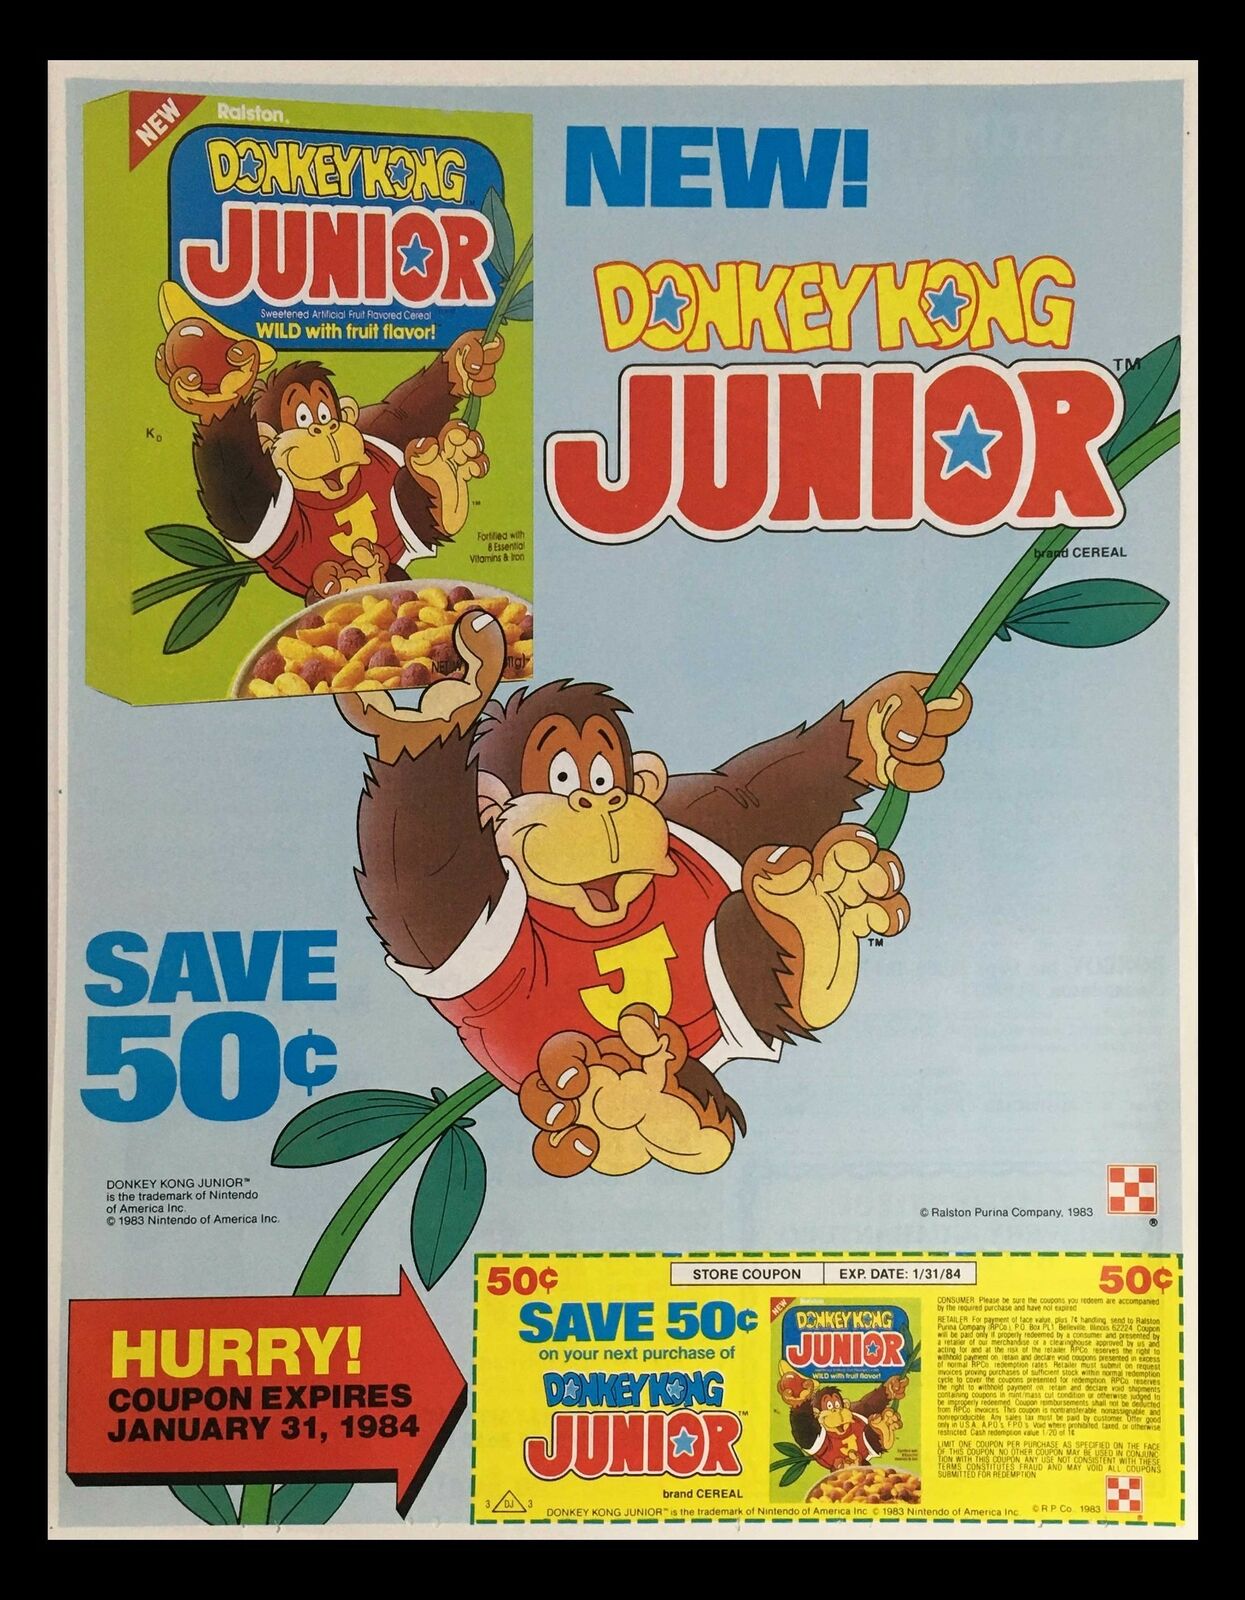 1983 Ralston Donkey Kong Junior Flavored Cereal Circular Coupon Advertisement